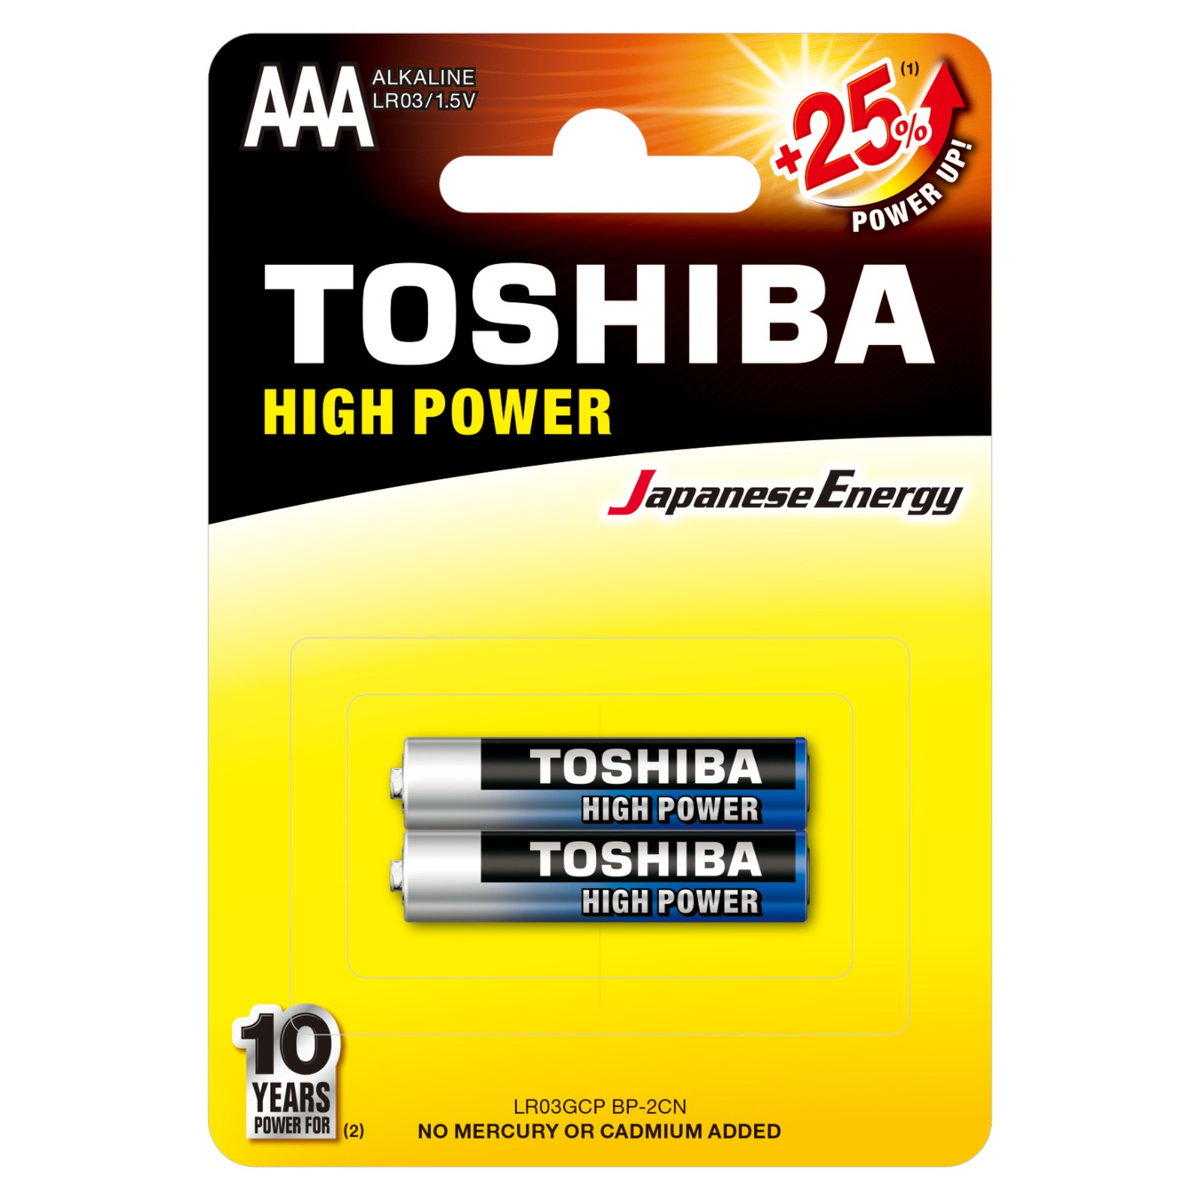 Toshiba High Power Alkaline AAA Battery, 1.5V x 2 Pcs, LR03